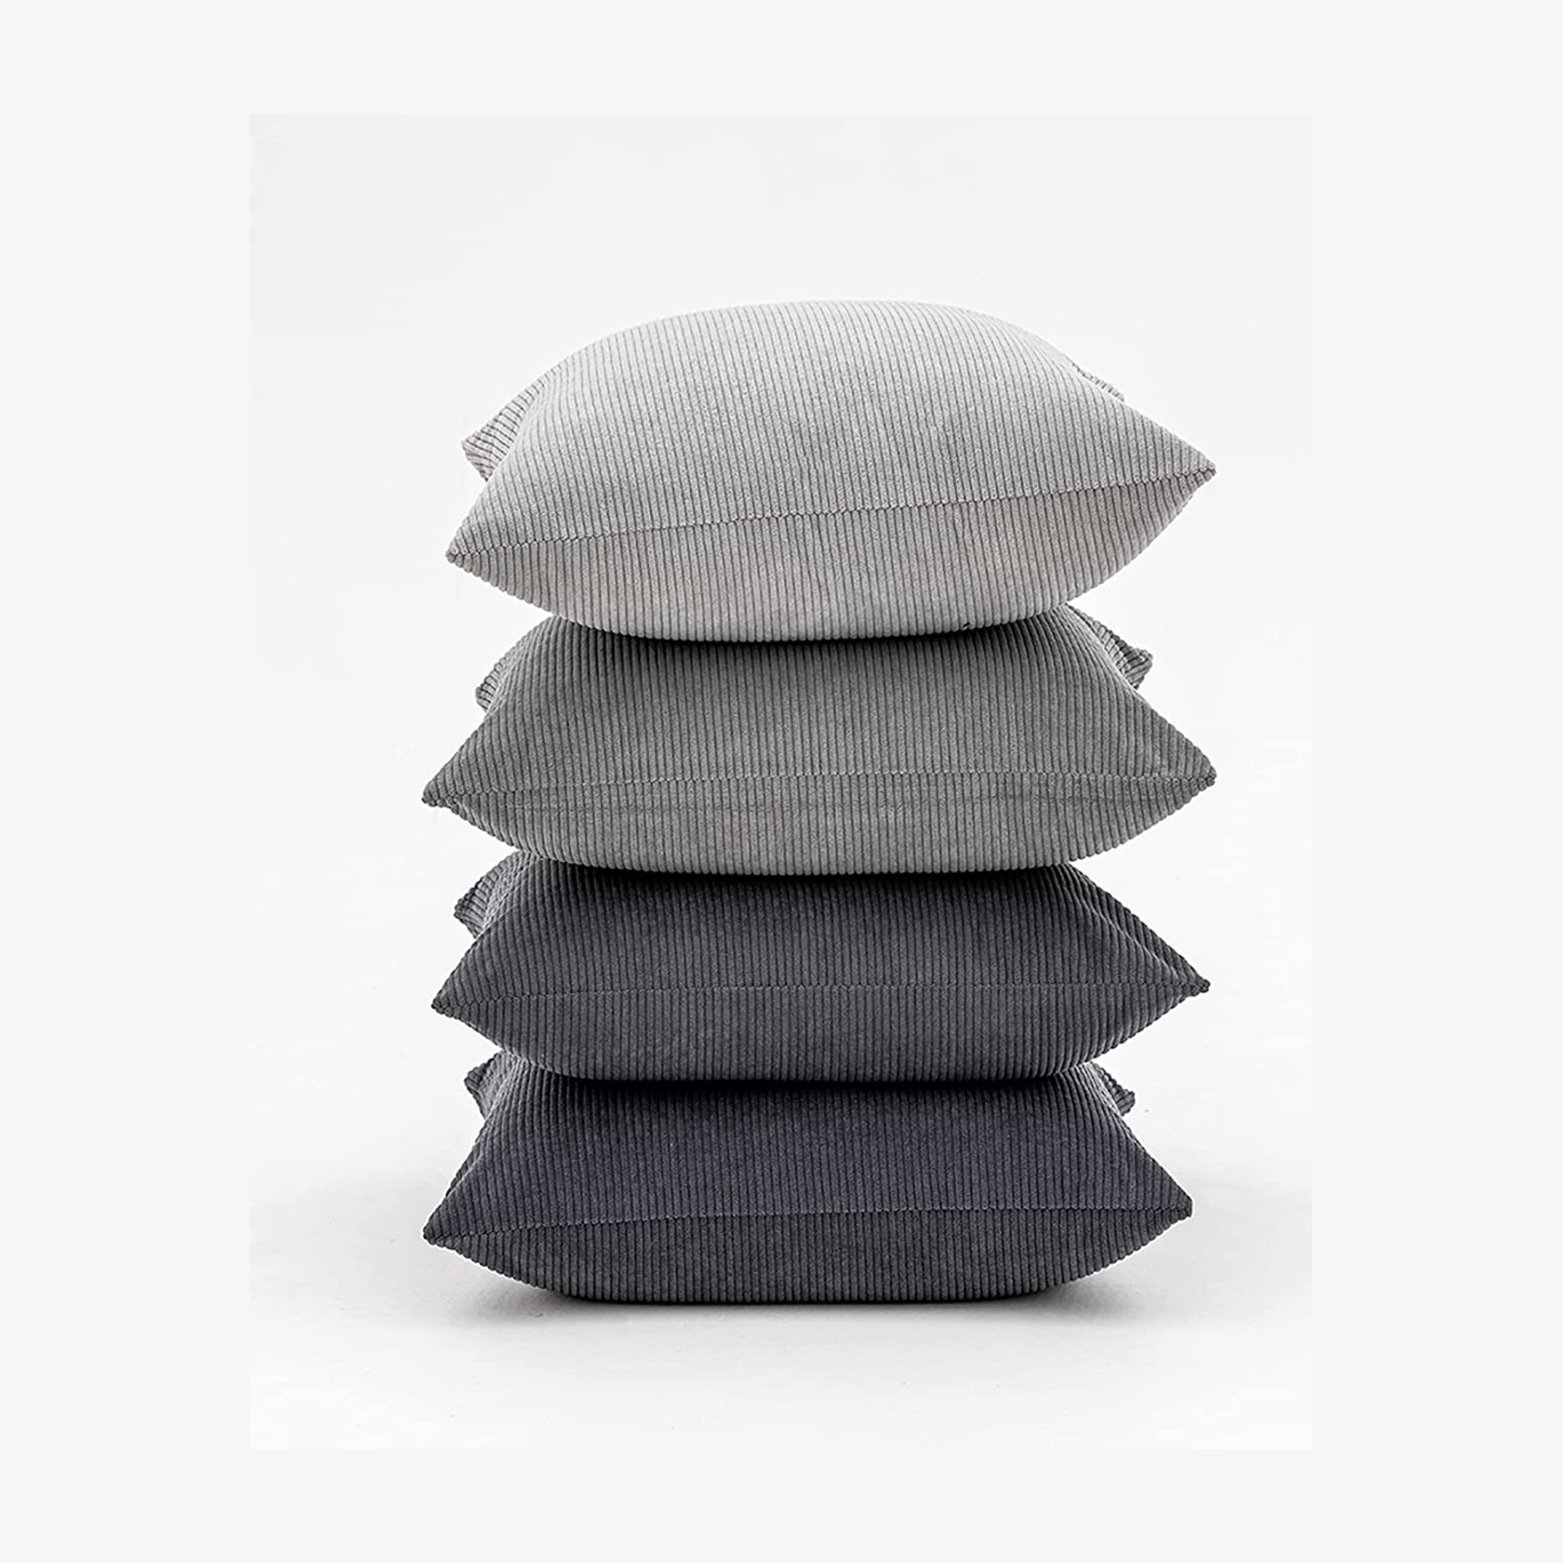 Grey Ombre Pillow Set of Four.jpg